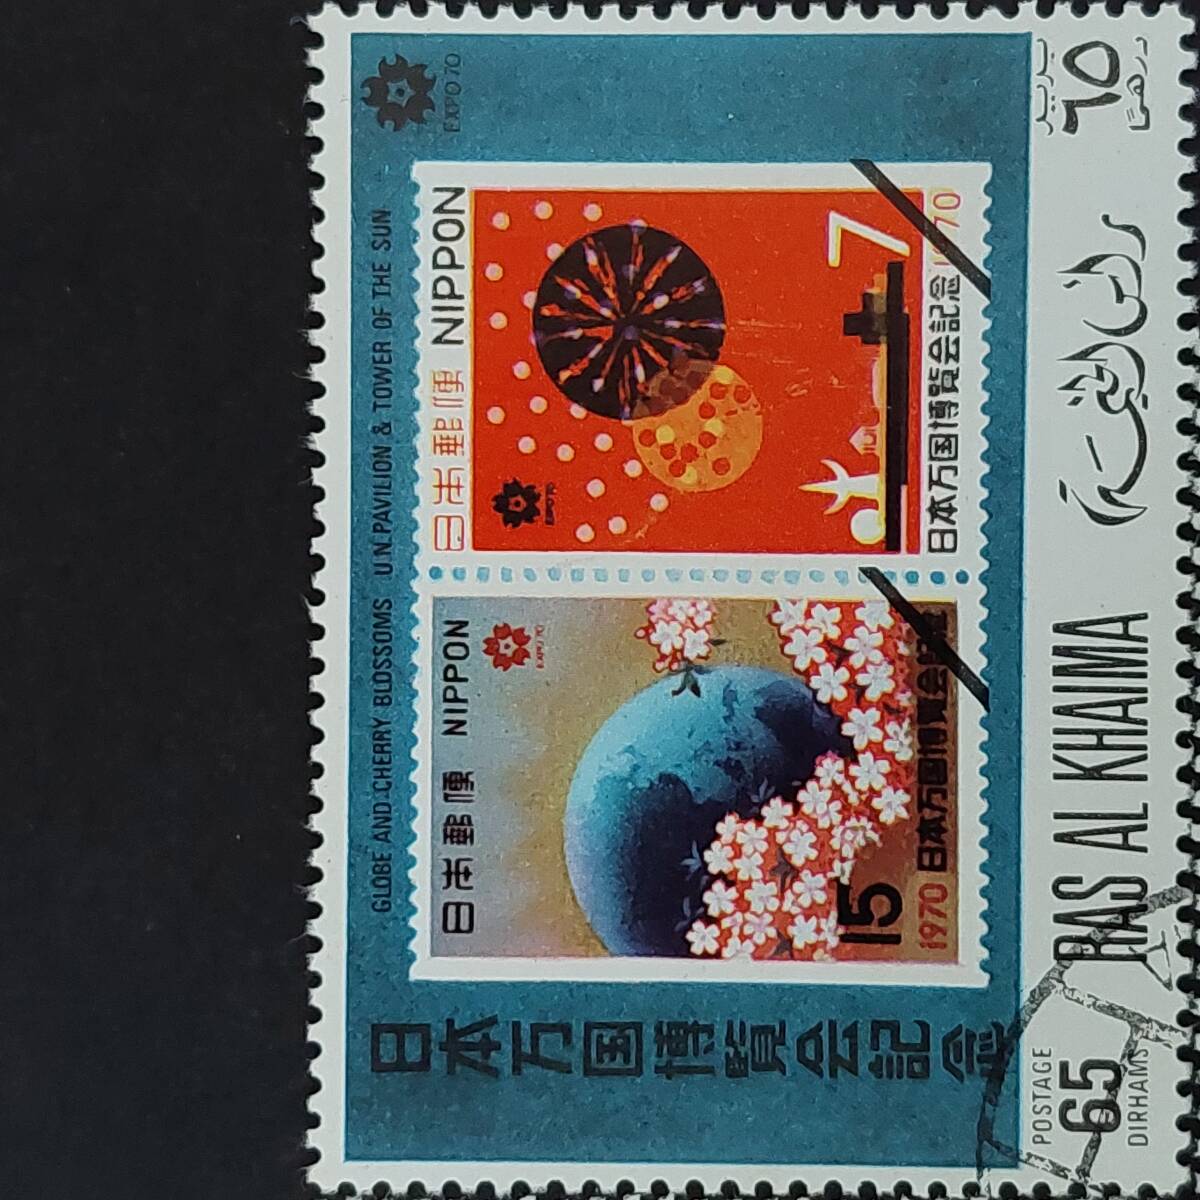 J579 ラス・アル・ハイマ（アラブ首長国連邦構成国）切手「1970年大阪万博記念切手:日本切手をデザインした切手8種完」1970年発行 使用済み_画像4